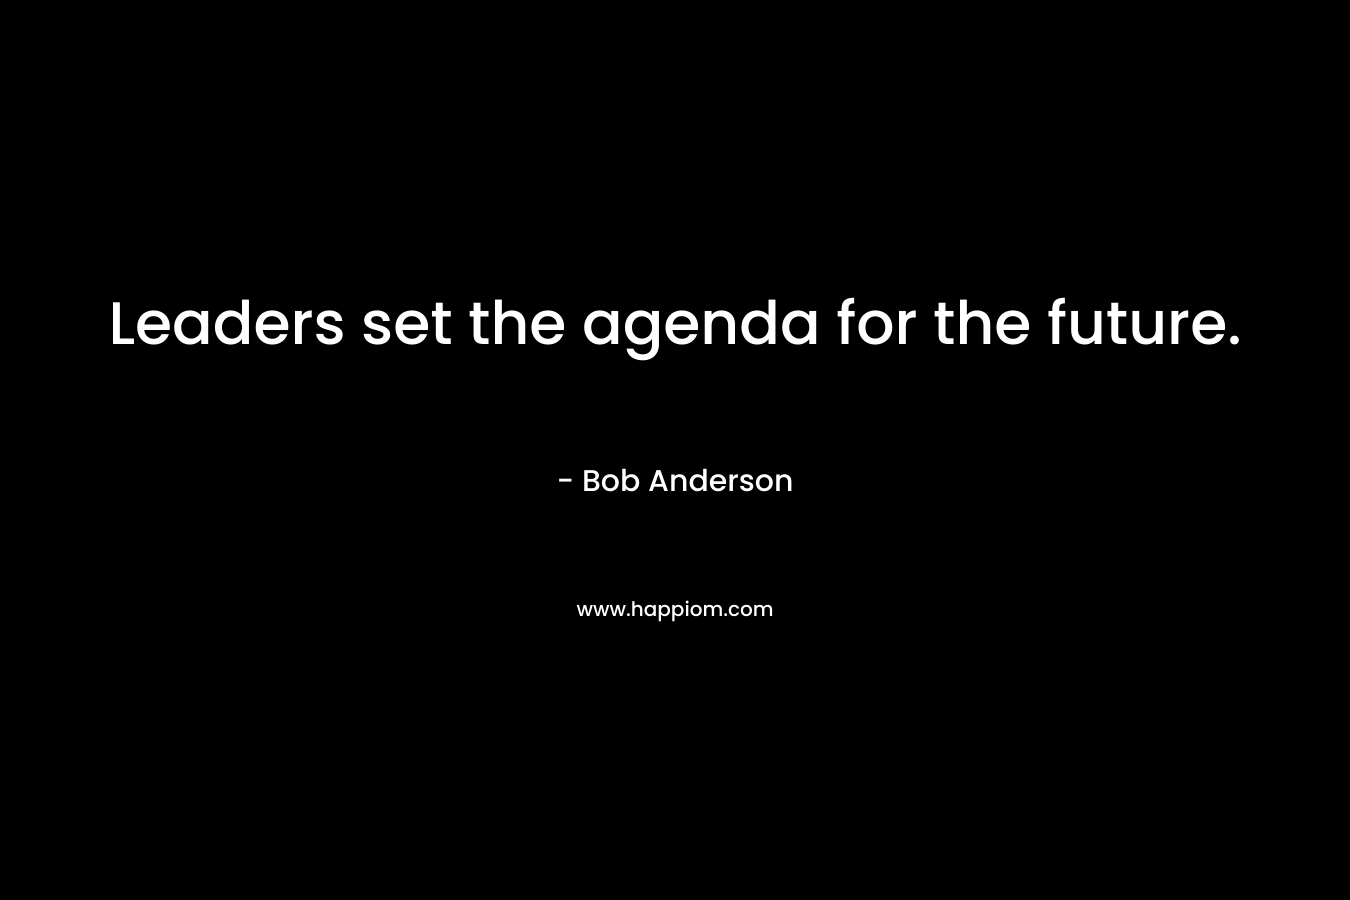 Leaders set the agenda for the future.